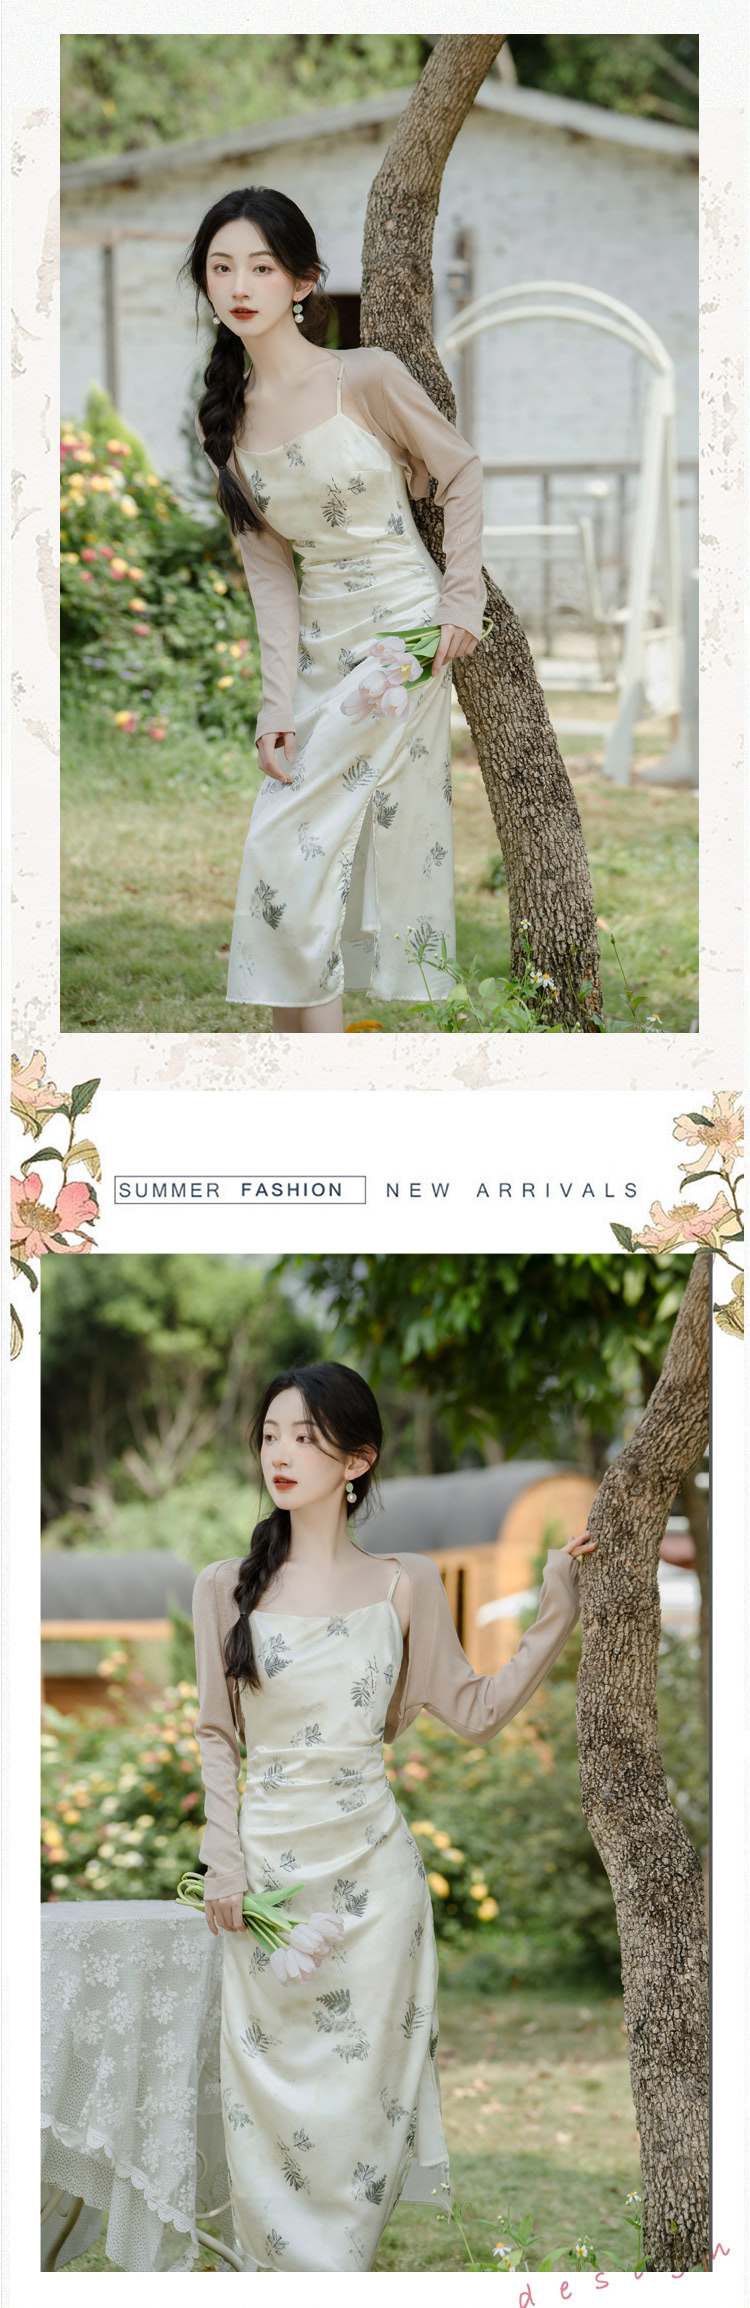 Charming-Floral-Print-Slip-Dress-Pretty-Summer-Beach-Casual-Outfit11